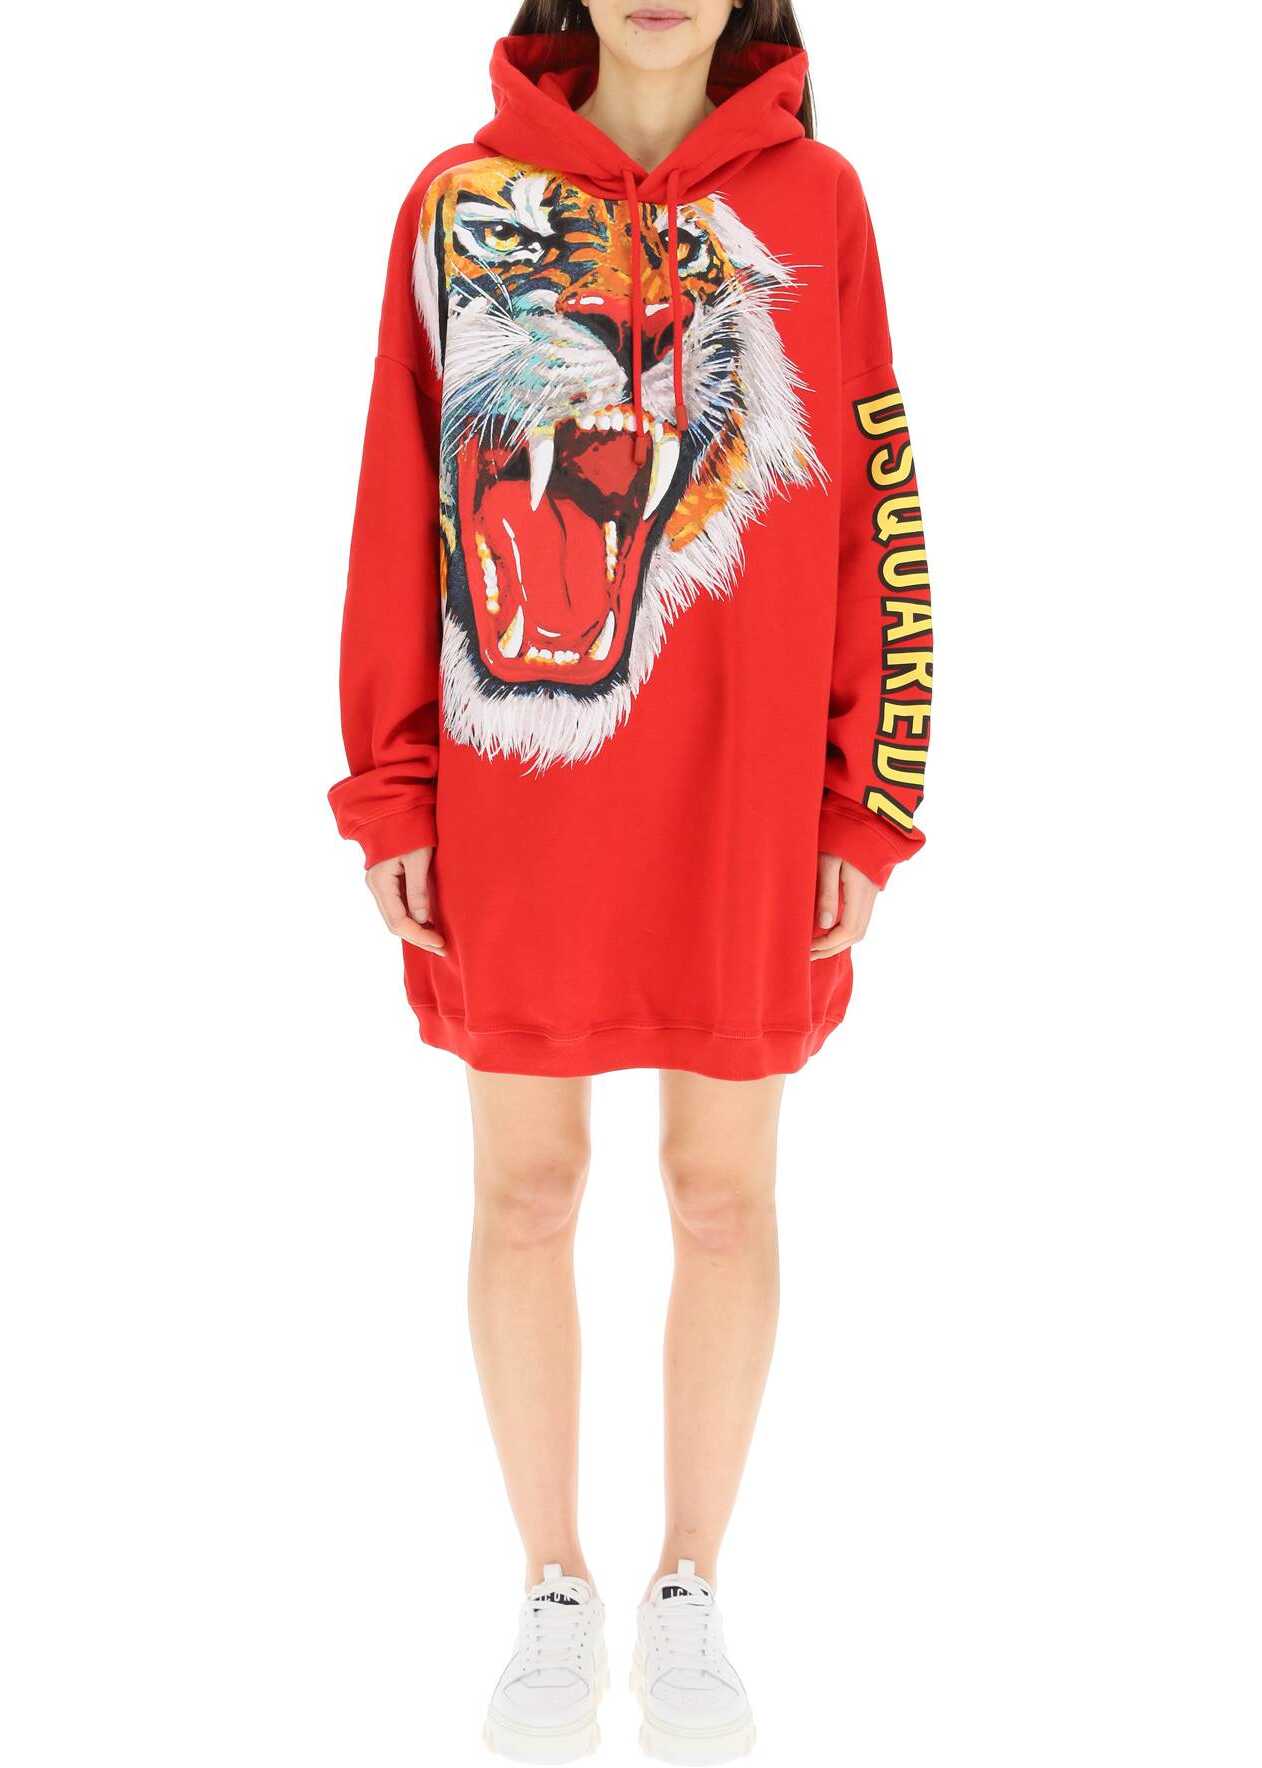 DSQUARED2 Tiger Print Fleece Dress S75CV0531 S25516 RED image0